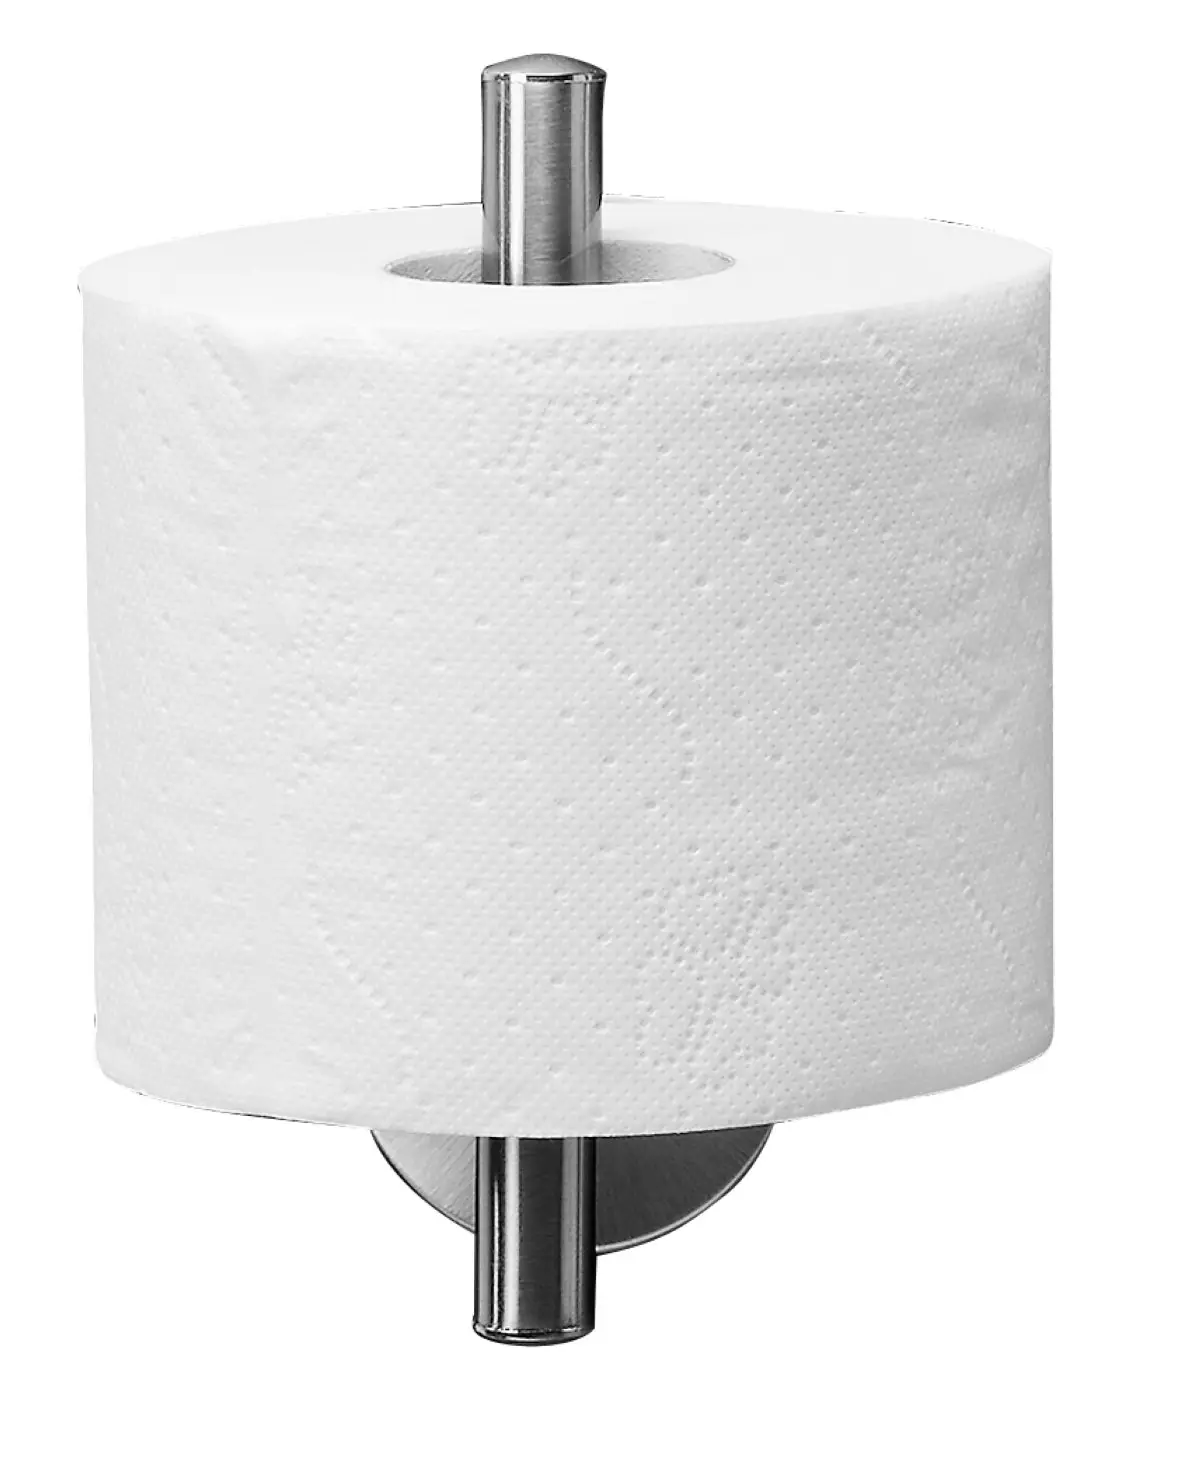 vernickelter Toilettenpapierhalter